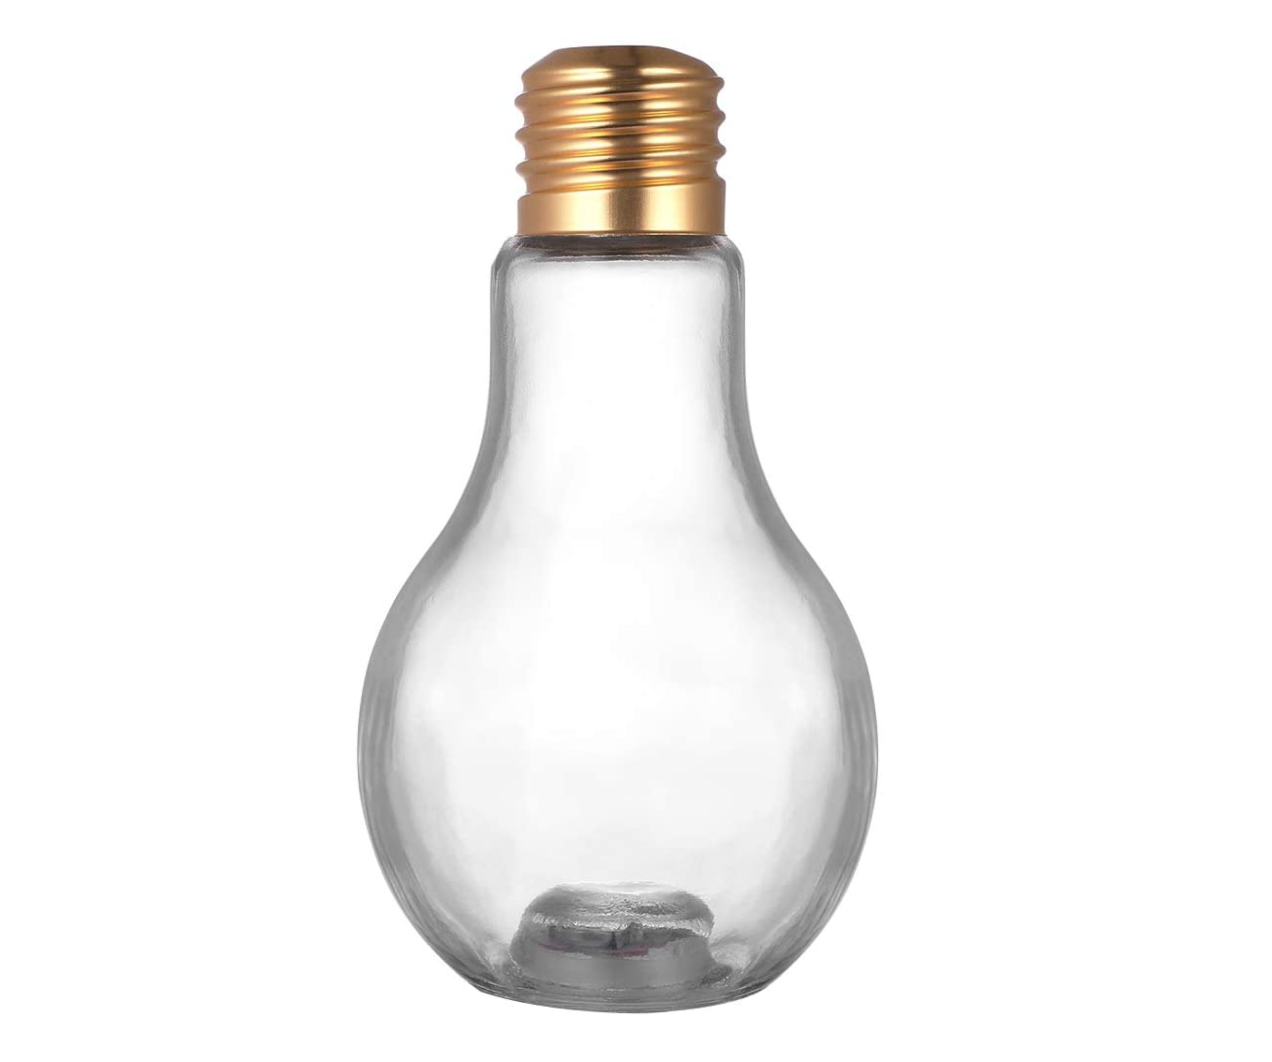 500ML Light Bulb Shaped Glass Bottle Novelty Drinking Glasses for Drinks Beers Cocktails